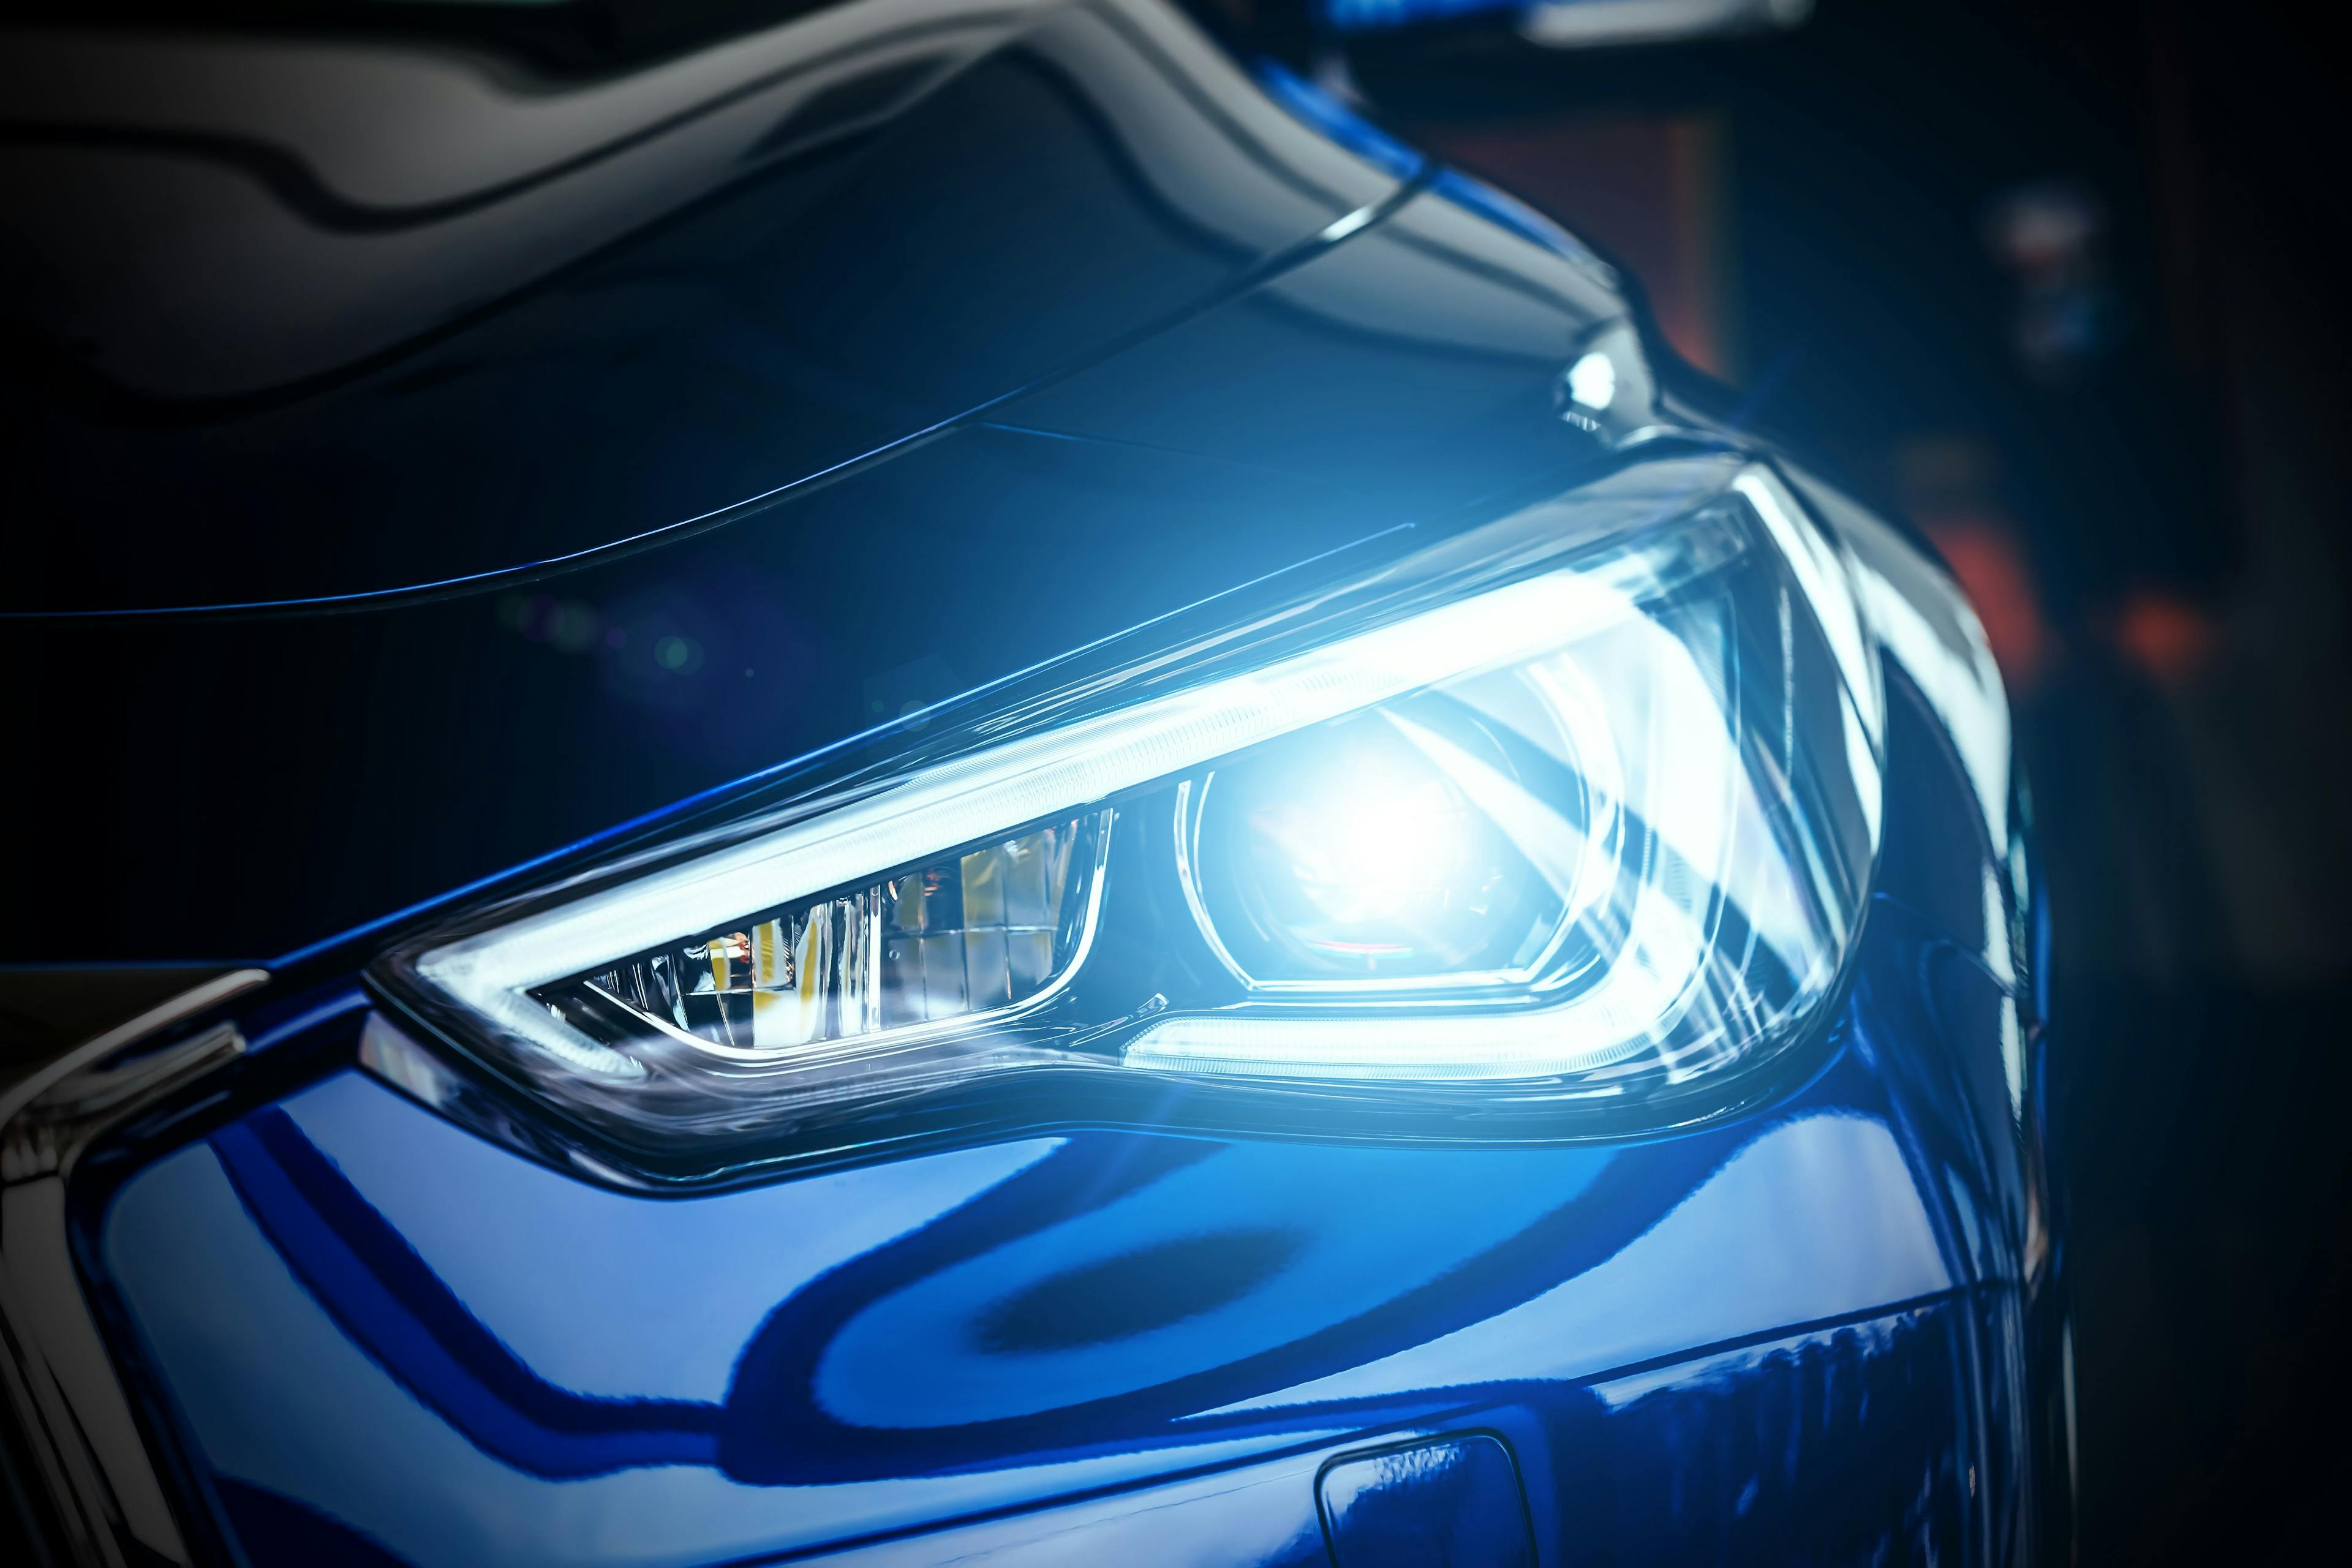 Modern car xenon lamp headlight | Image Credit: © Scanrail - stock.adobe.com